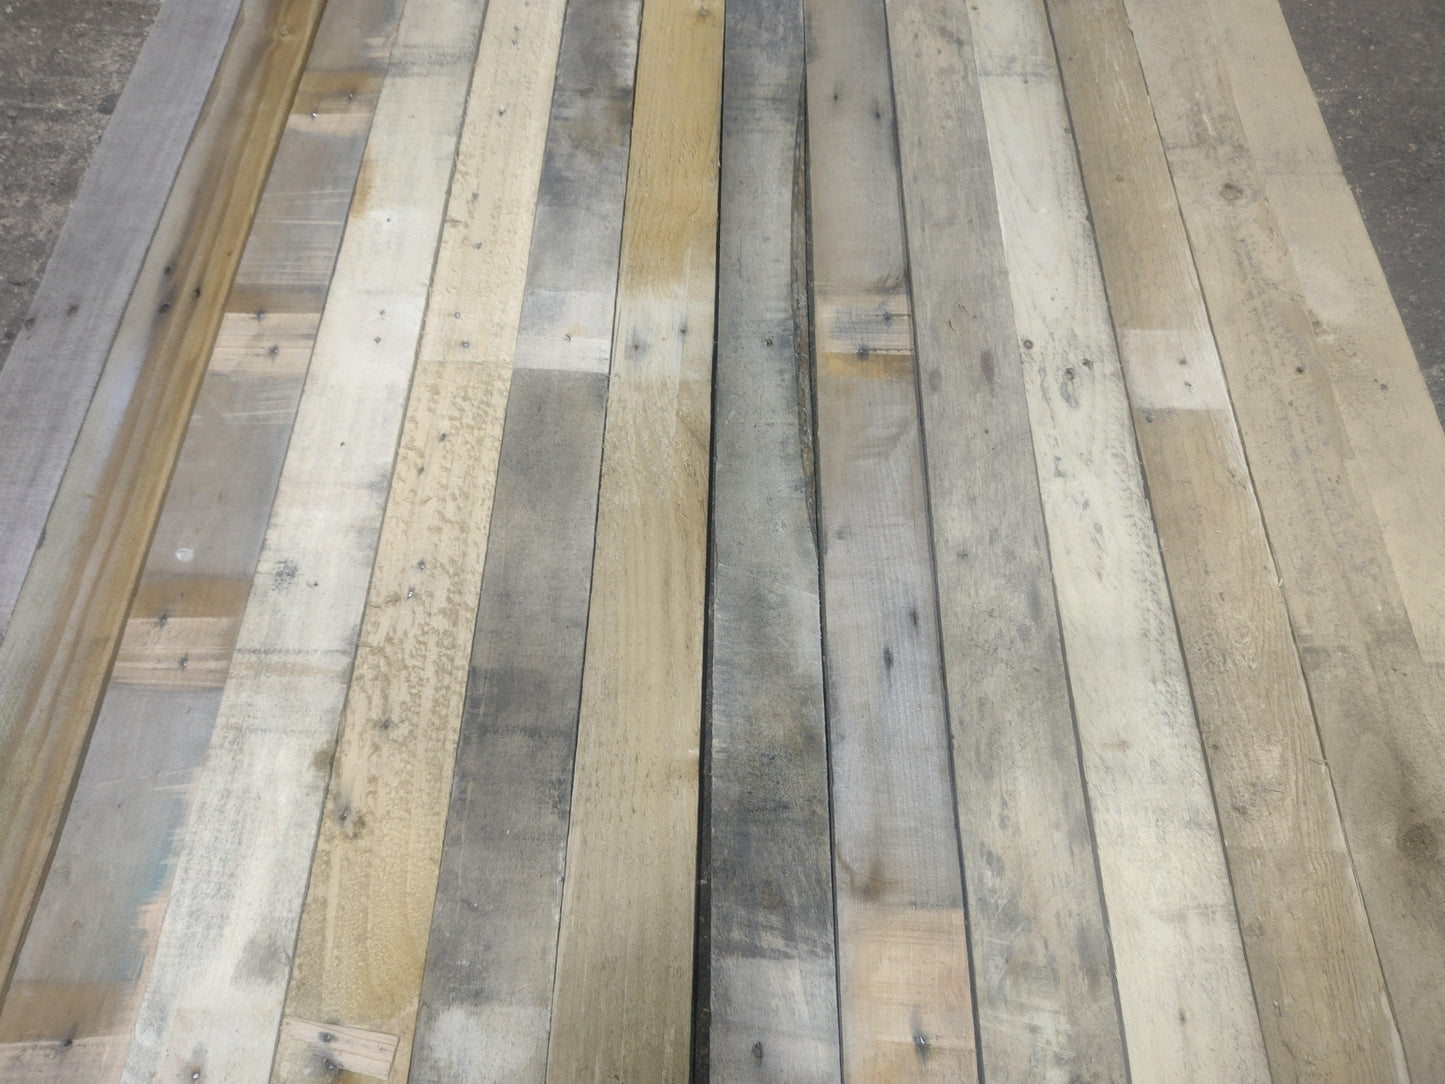 Reclaimed wood for cladding 2sqm - Anpio woods ltd